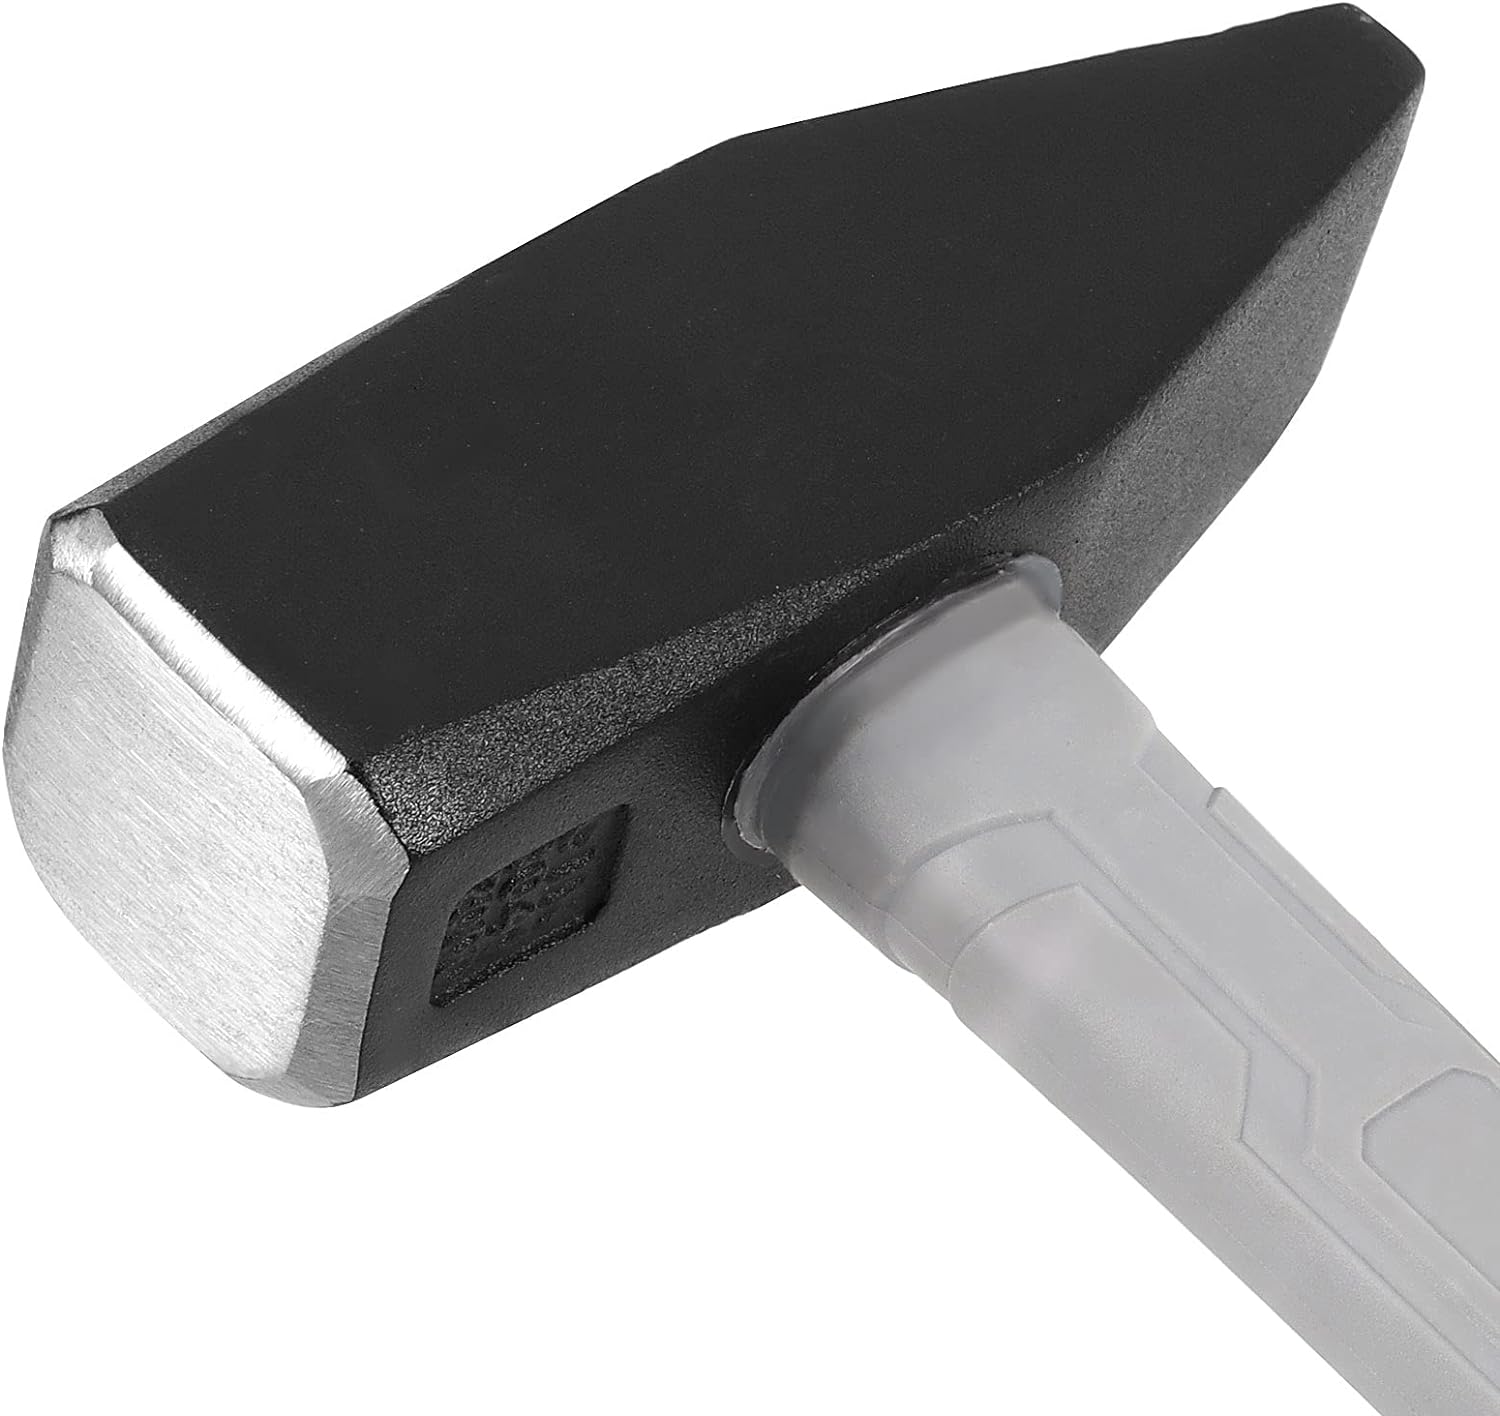 HOIGON 2 Pack 4.4LB Blacksmith's Hammer, Cross Pein Hammer with Shock Absorbing Fiberglass Handle, Cross Peen Hammer for Metal Process